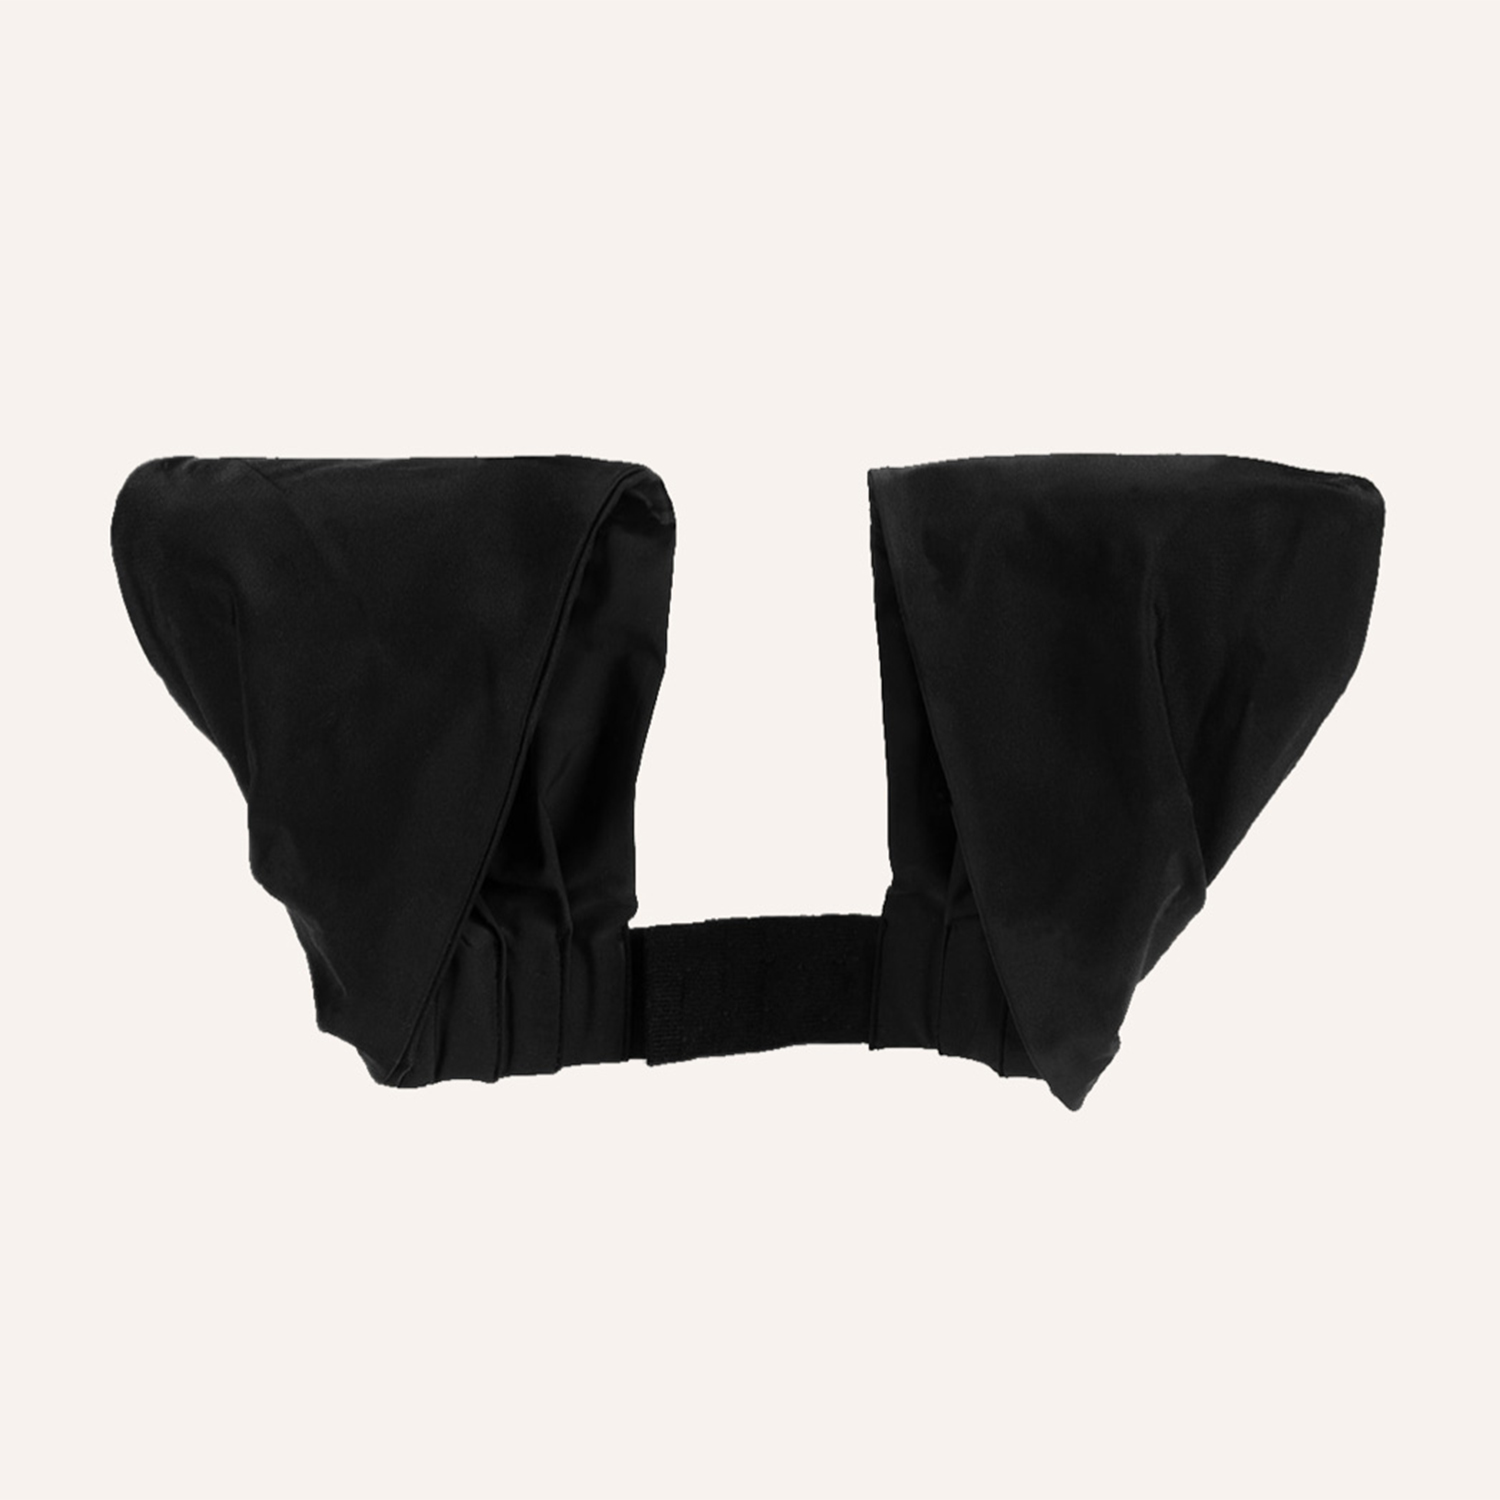 SWEDISH POSTURE Feminine Schulterstütze schwarz, Damen, 0309B2